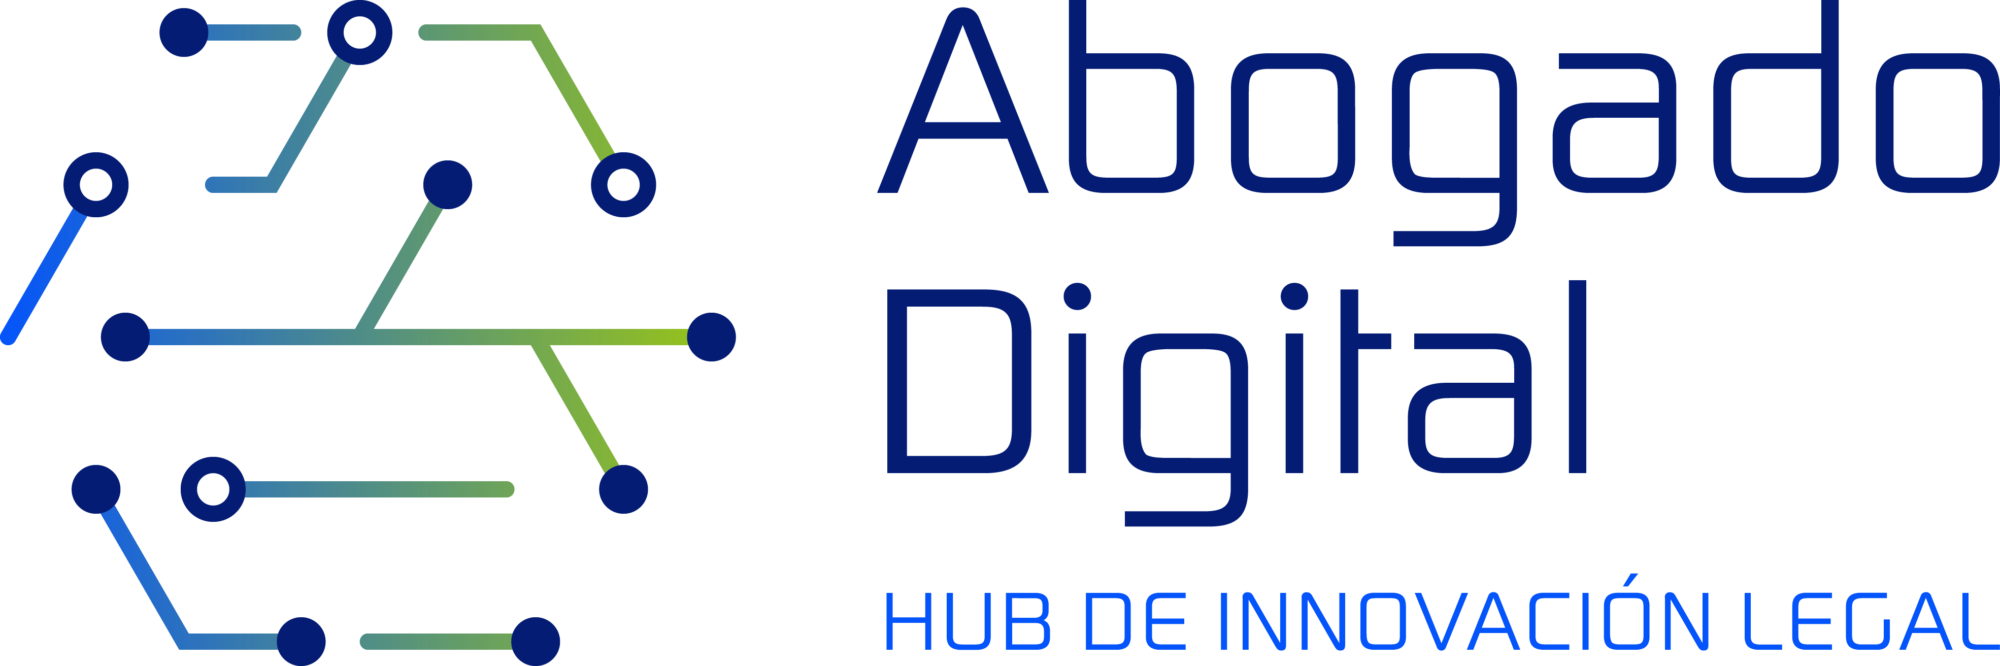 Abogado Digital Logo